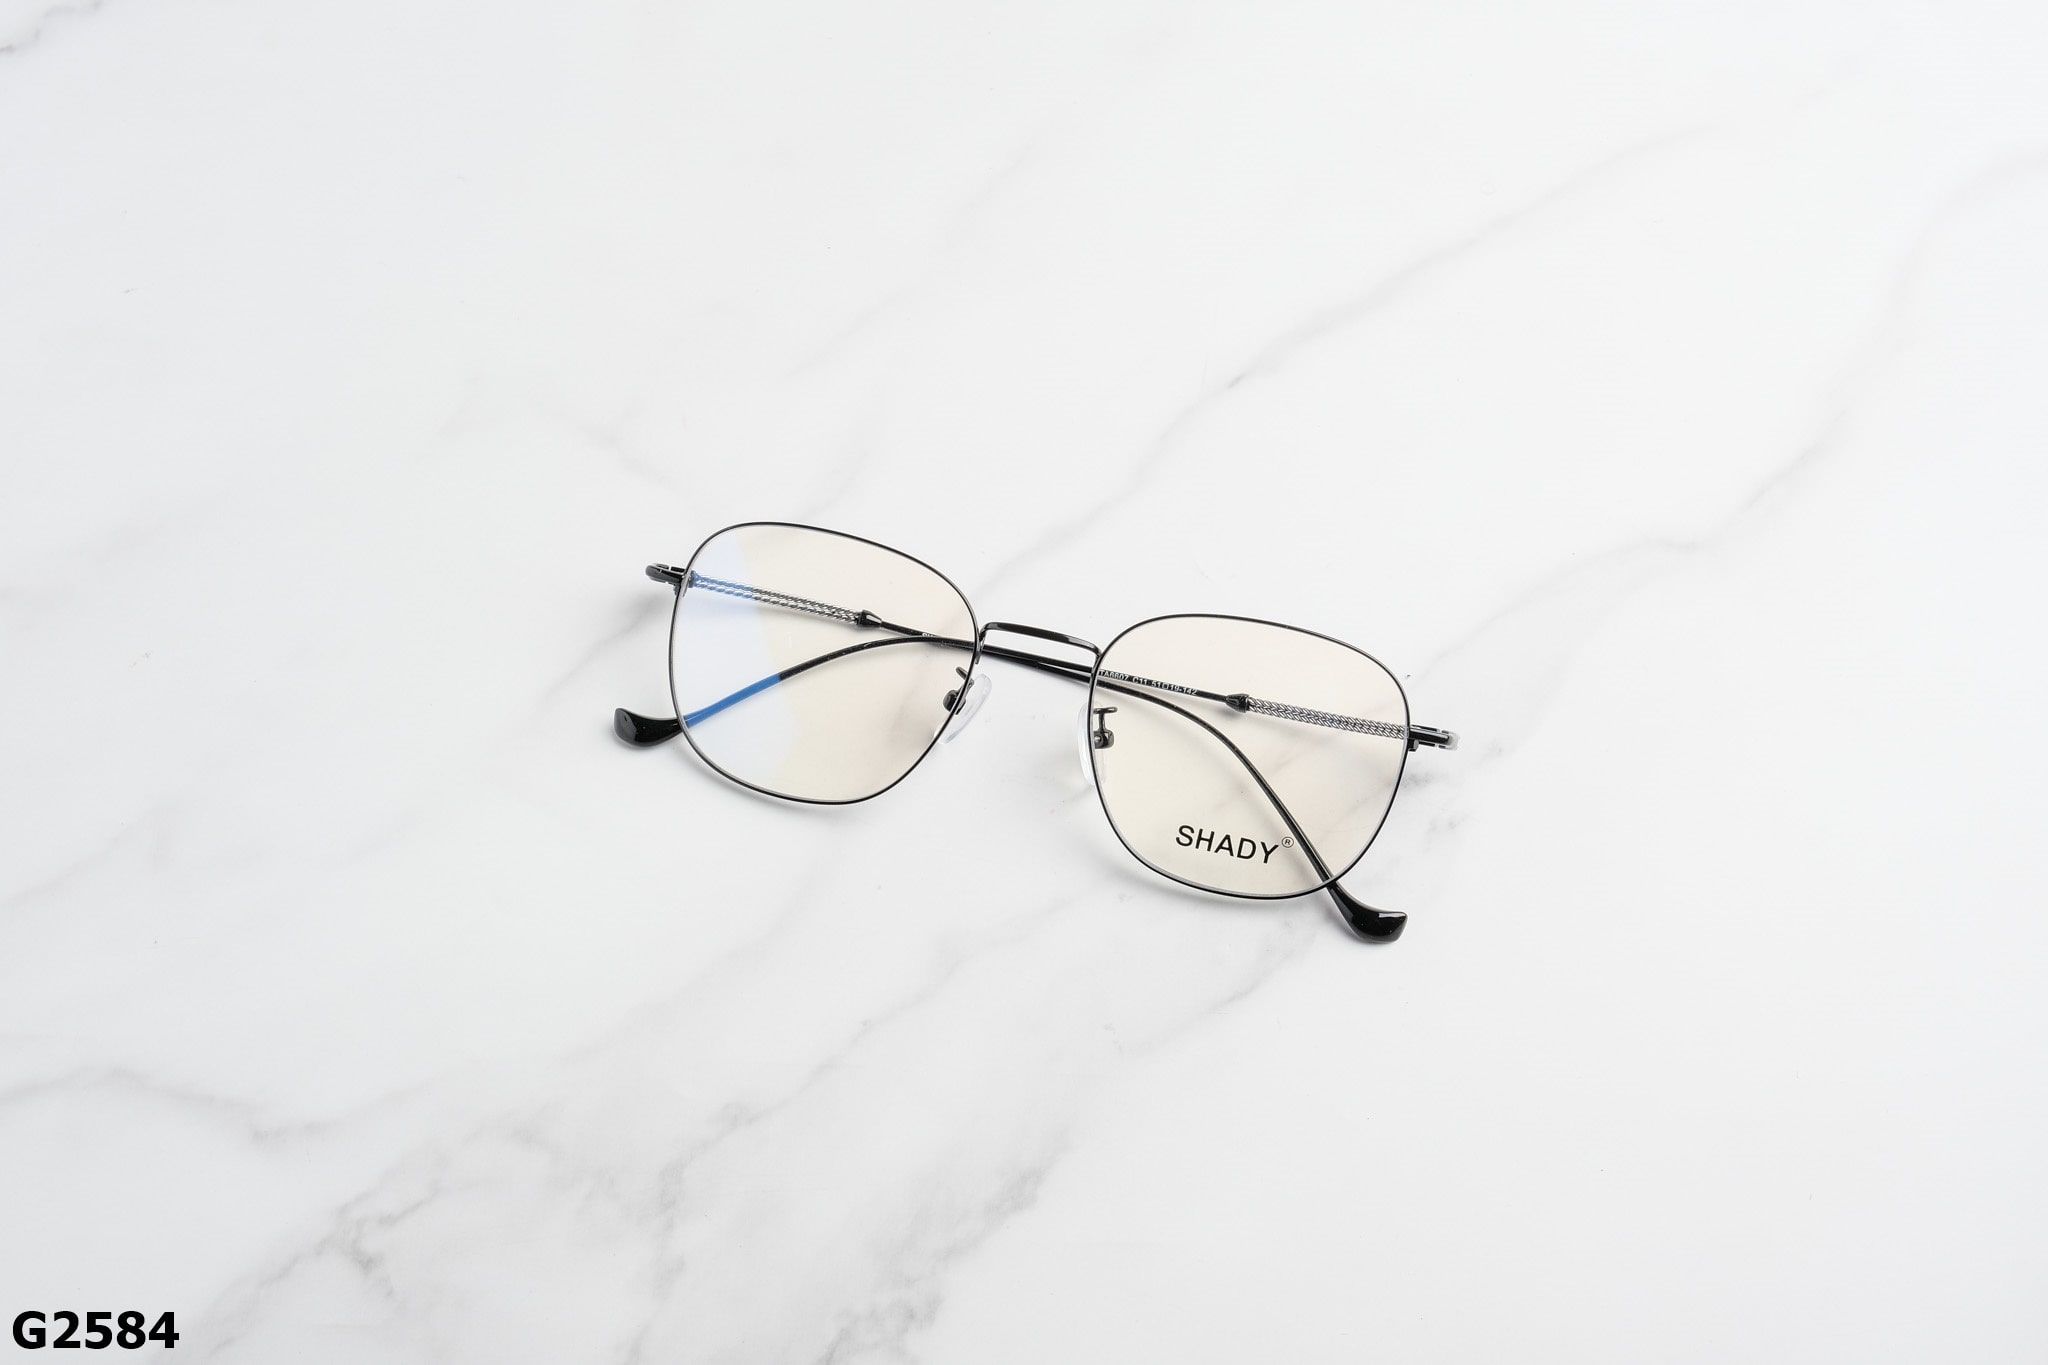  SHADY Eyewear - Glasses - G2584 